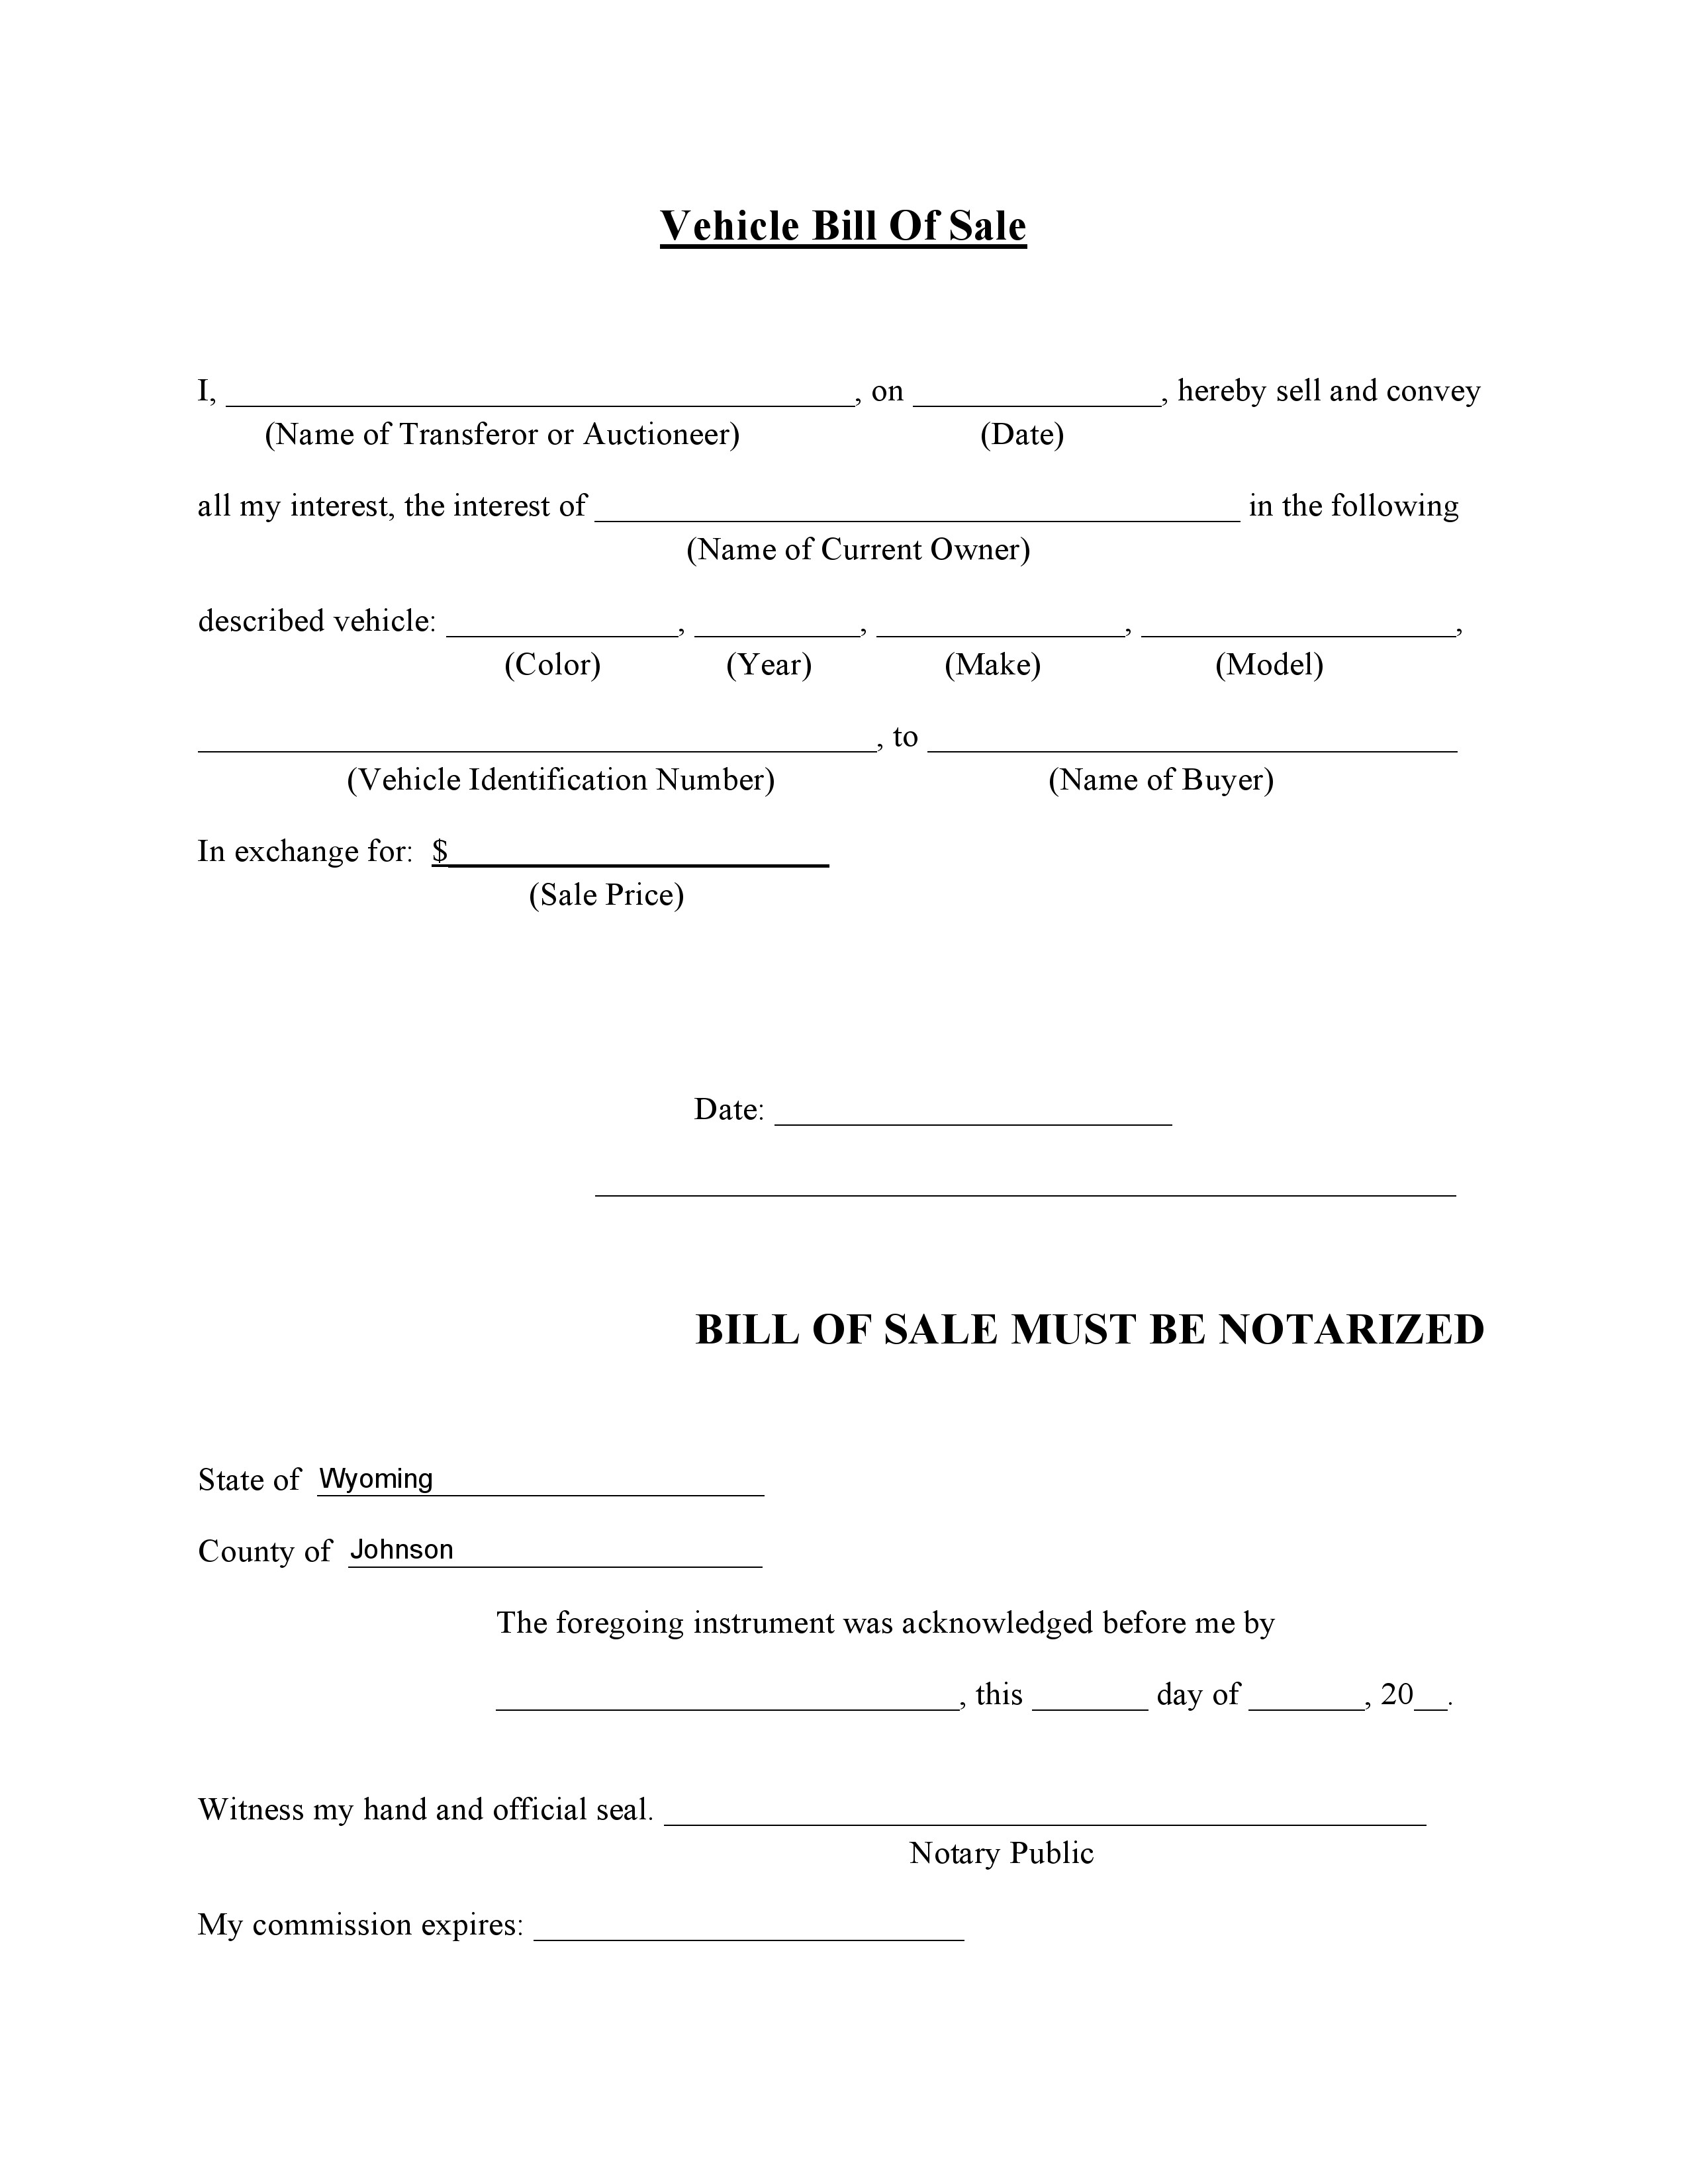 free johnson county vehicle bill of sale pdf word do